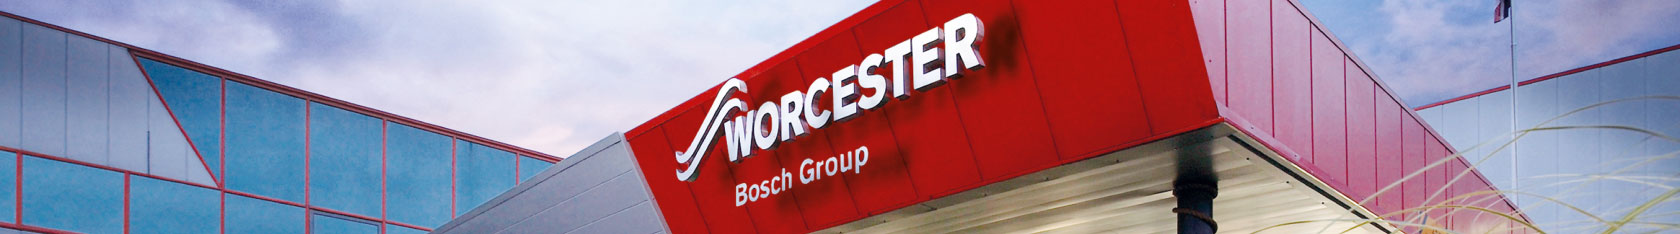 Worcester Accredited Installer Washington